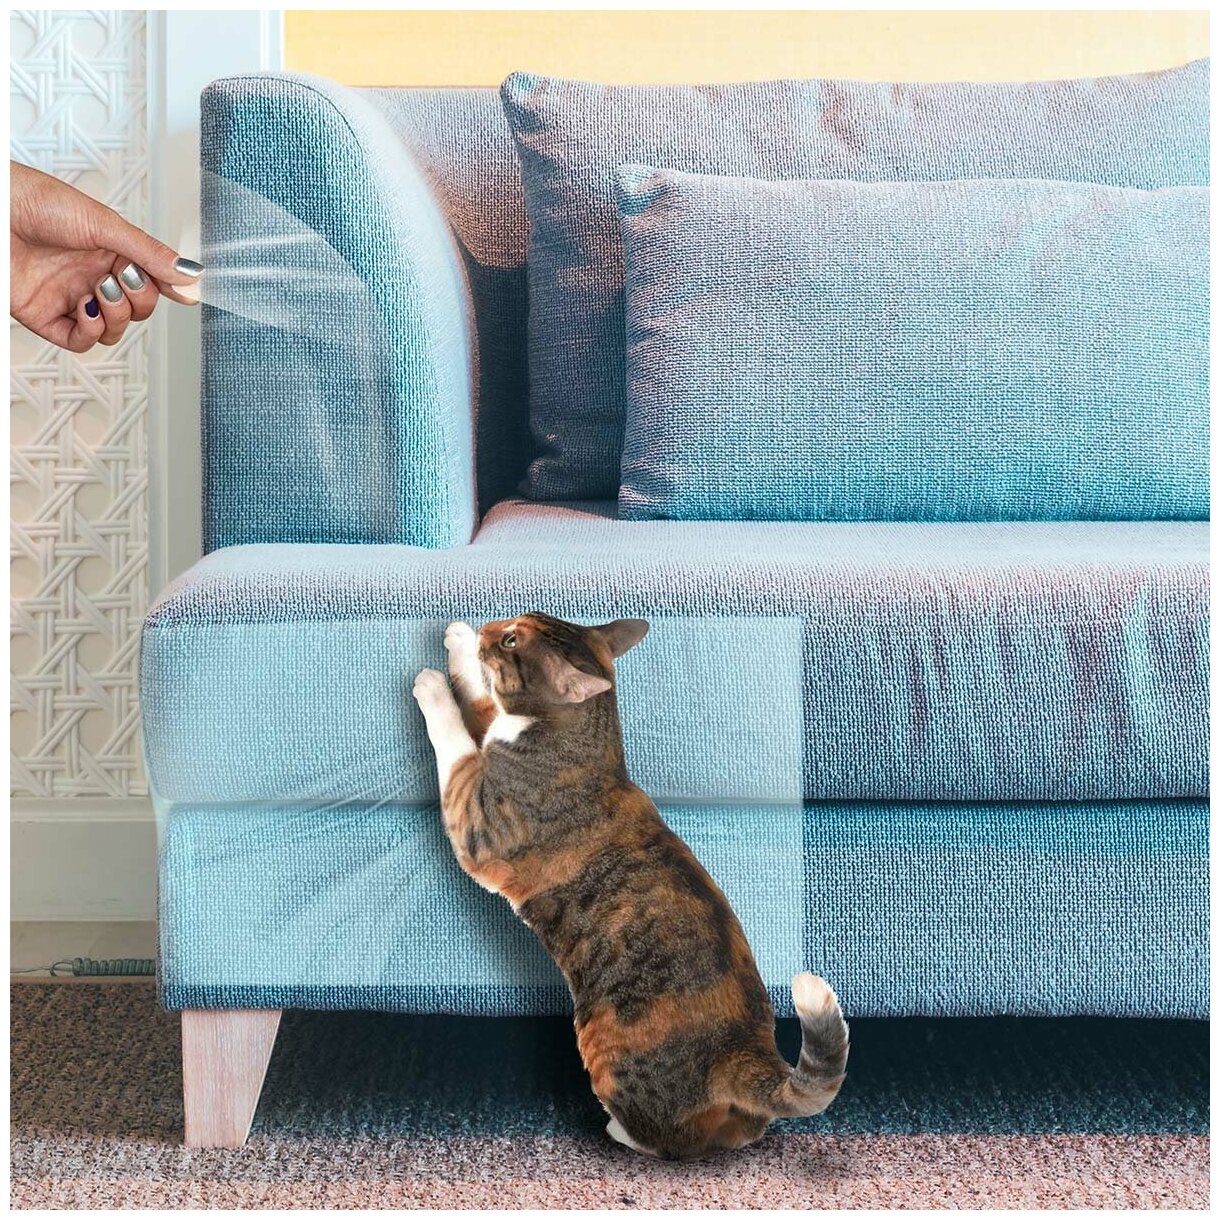 Антицарапка когтеточка защитная пленка от царапин VEROL самоклеящаяся пленка защитная для дивана мебели обоев наклейка для кошек и собак набор